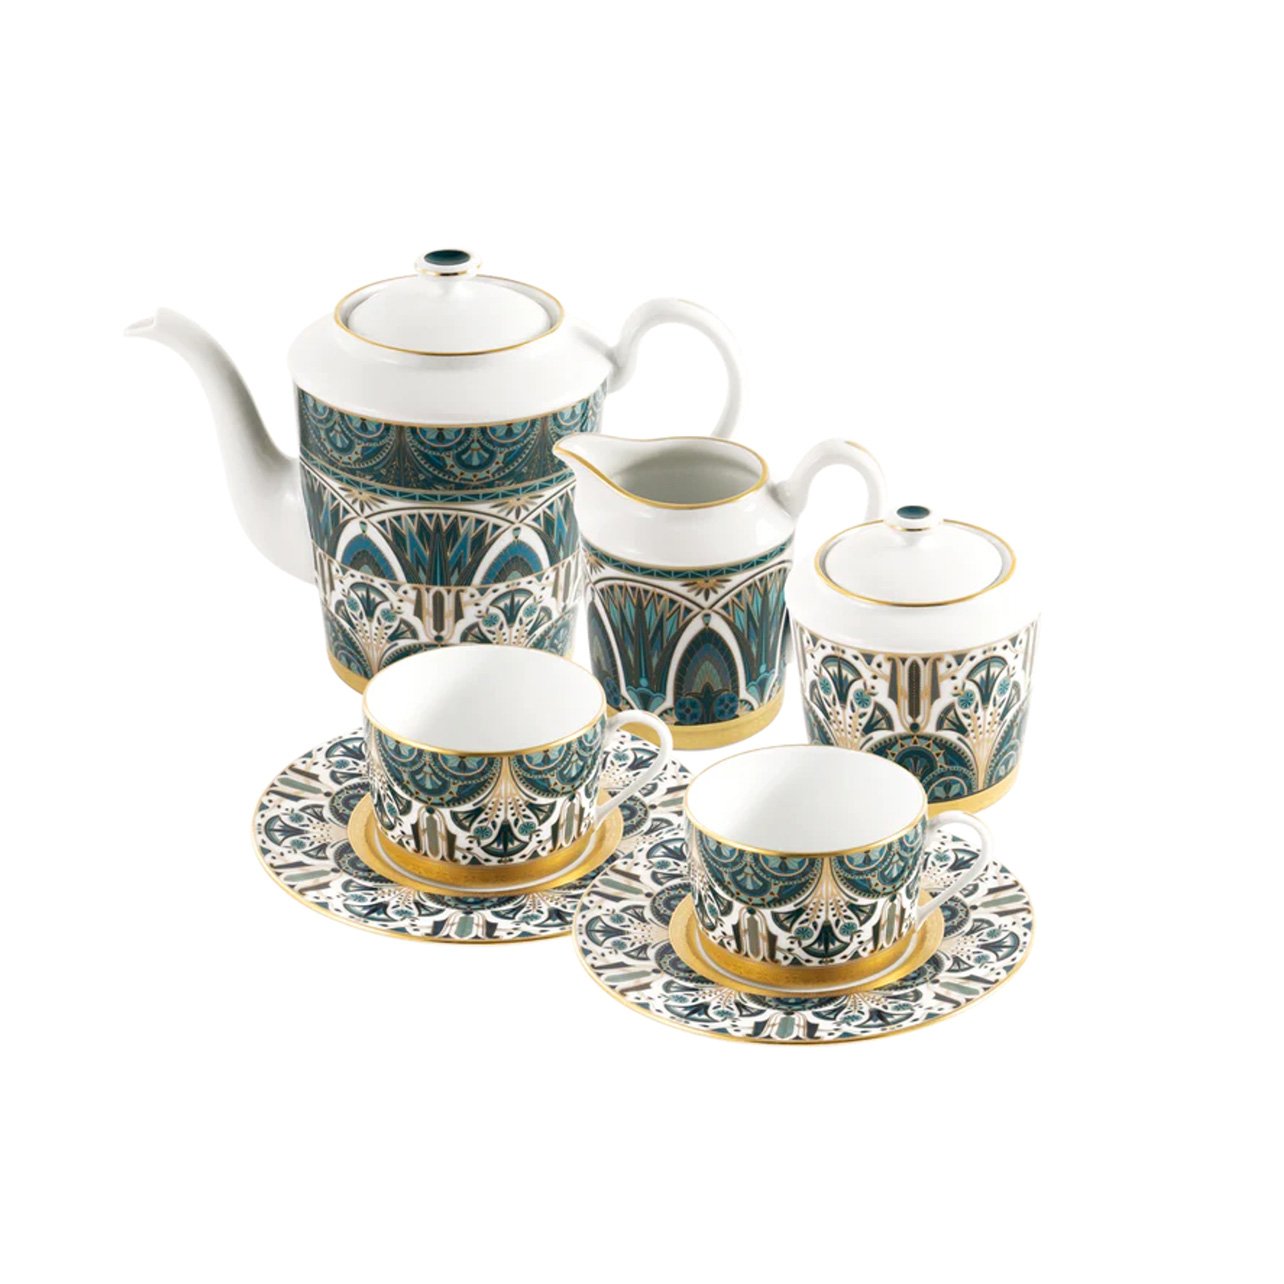 Haviland Rêves du Nil Collection Tea Set in blue and gold including teacups, saucers, teapot, creamer, sugar box